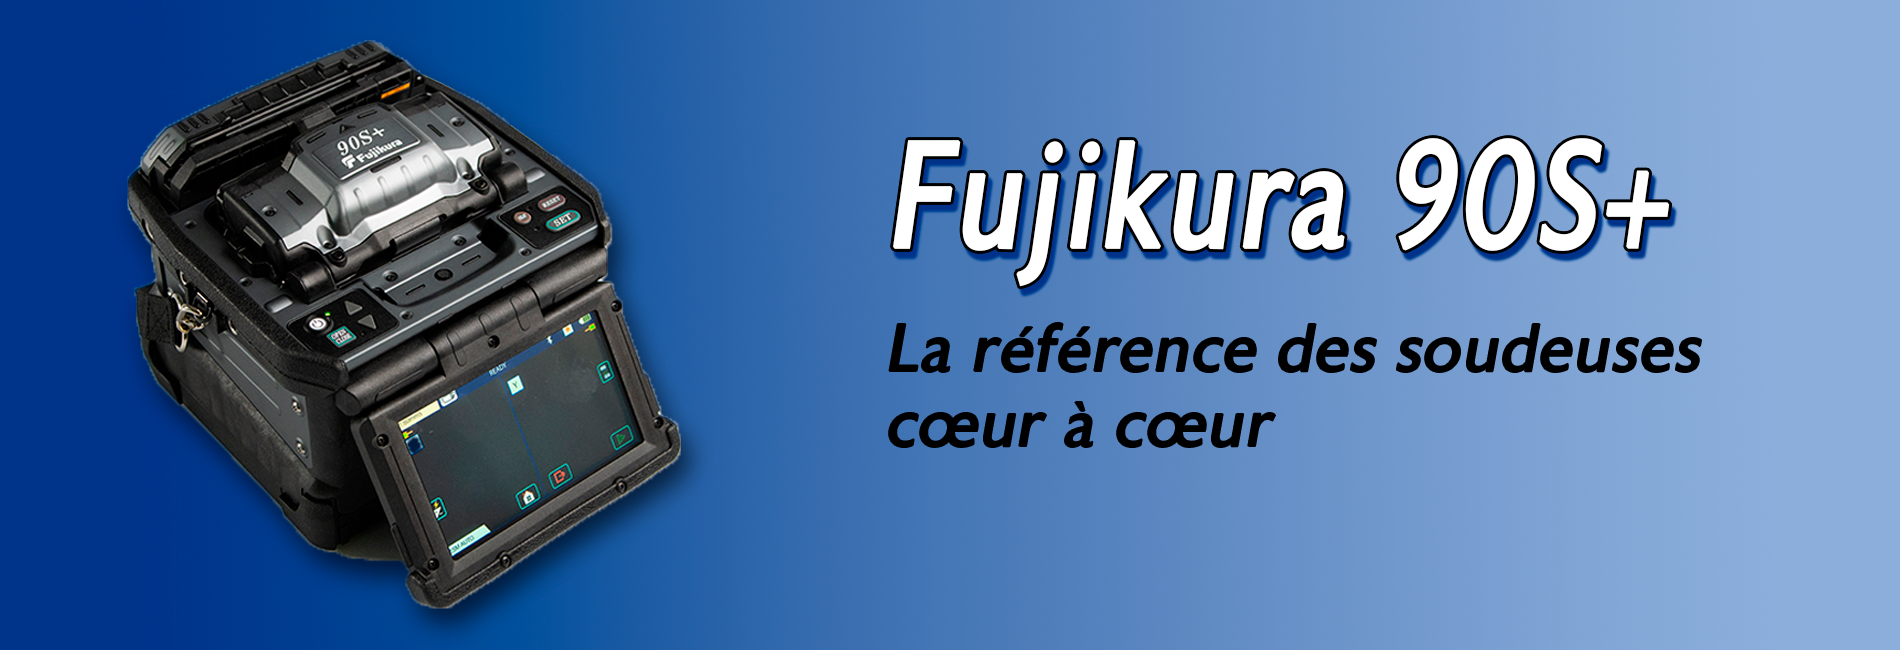 Soudeuse Fujikura 90S+